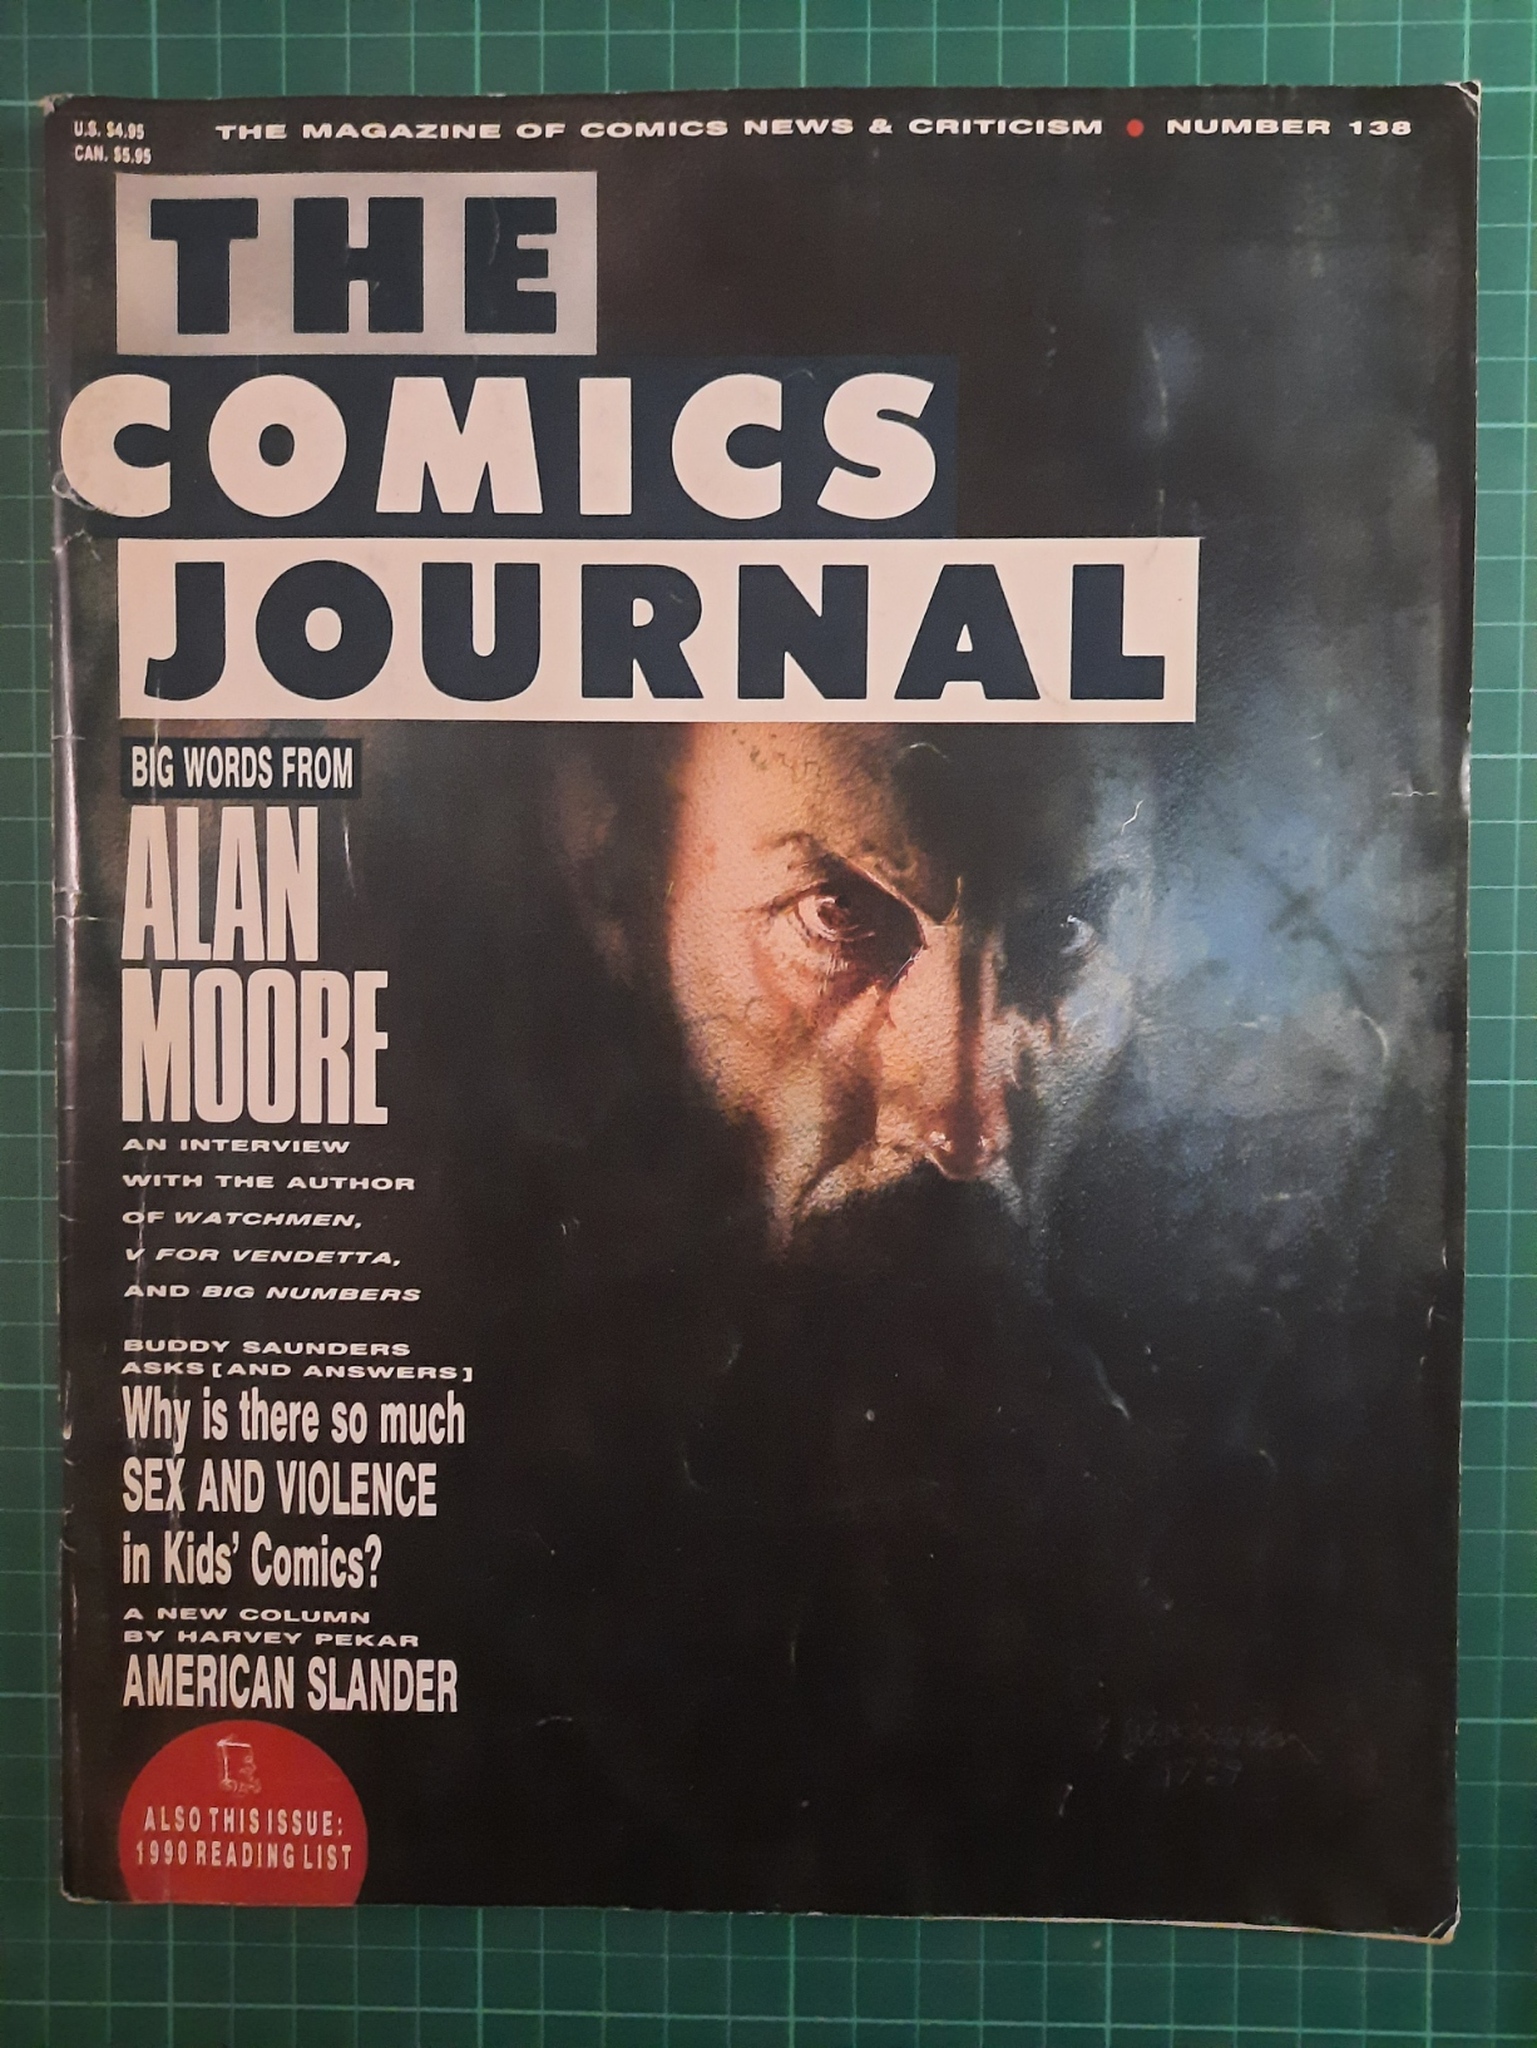 The comic journal #138